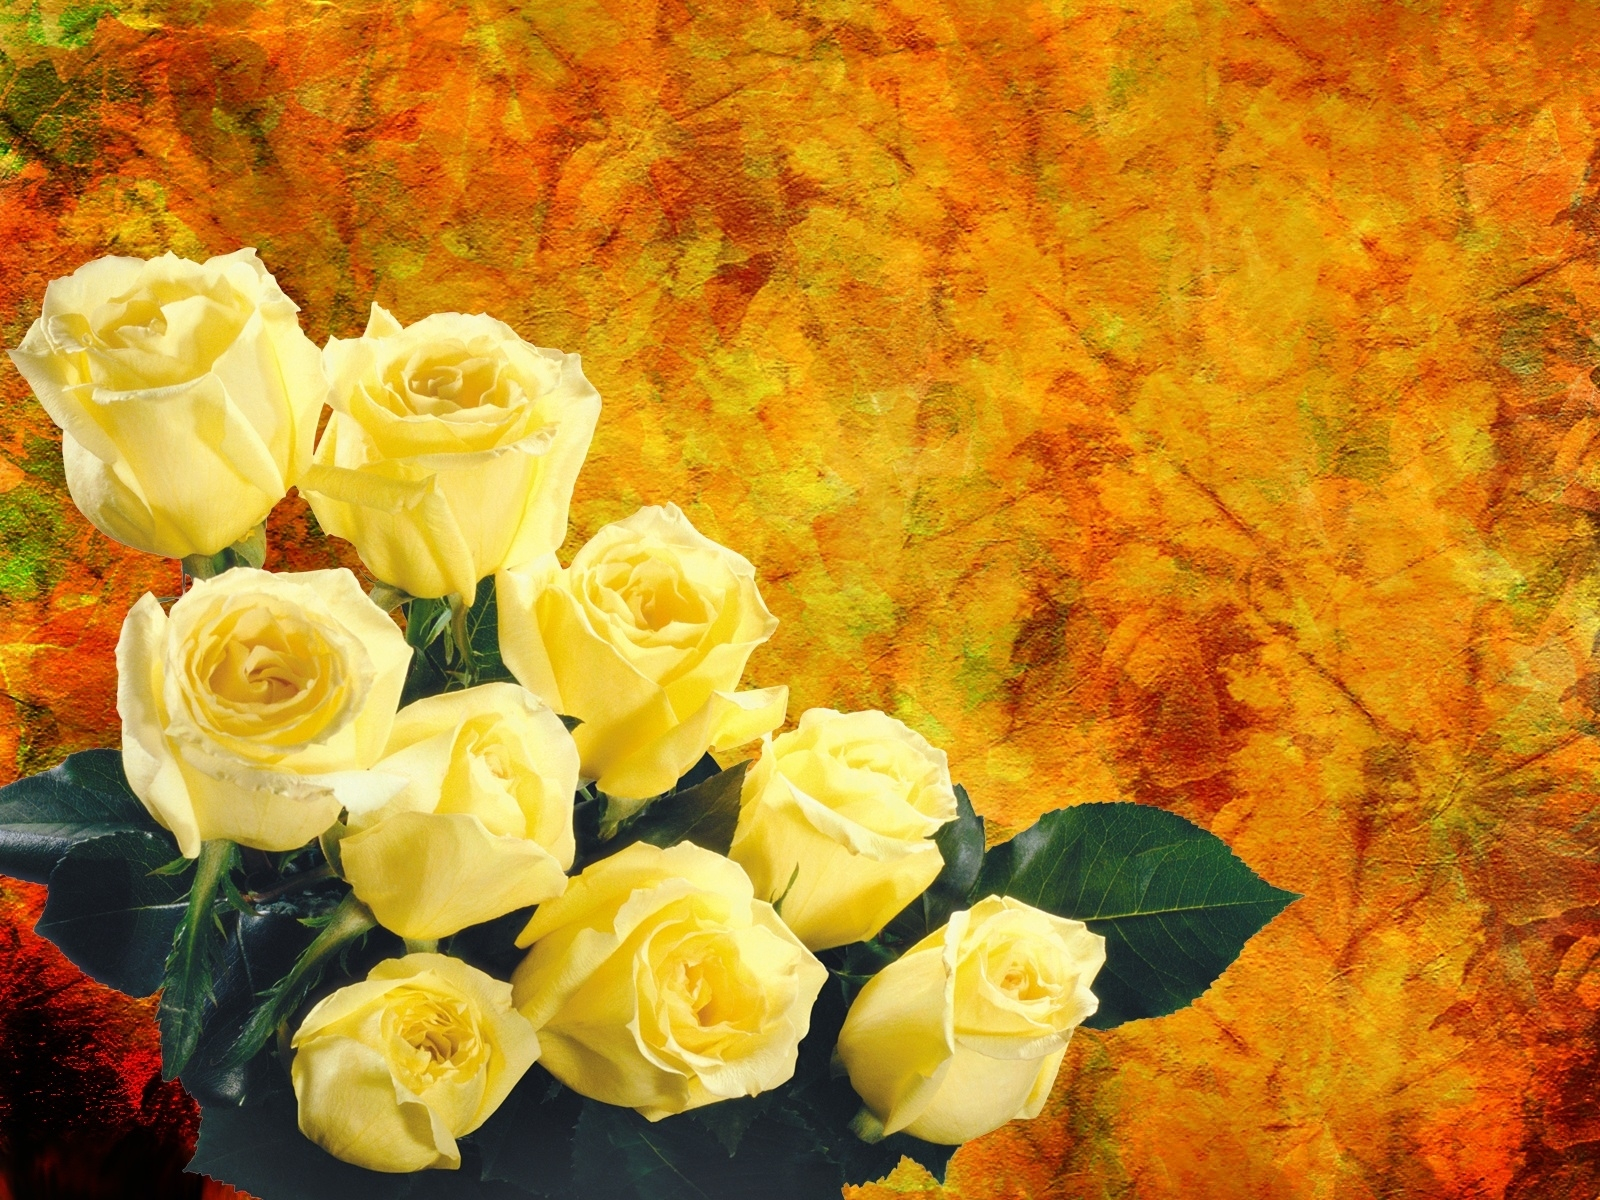 artistic, rose, flower, yellow flower, yellow rose